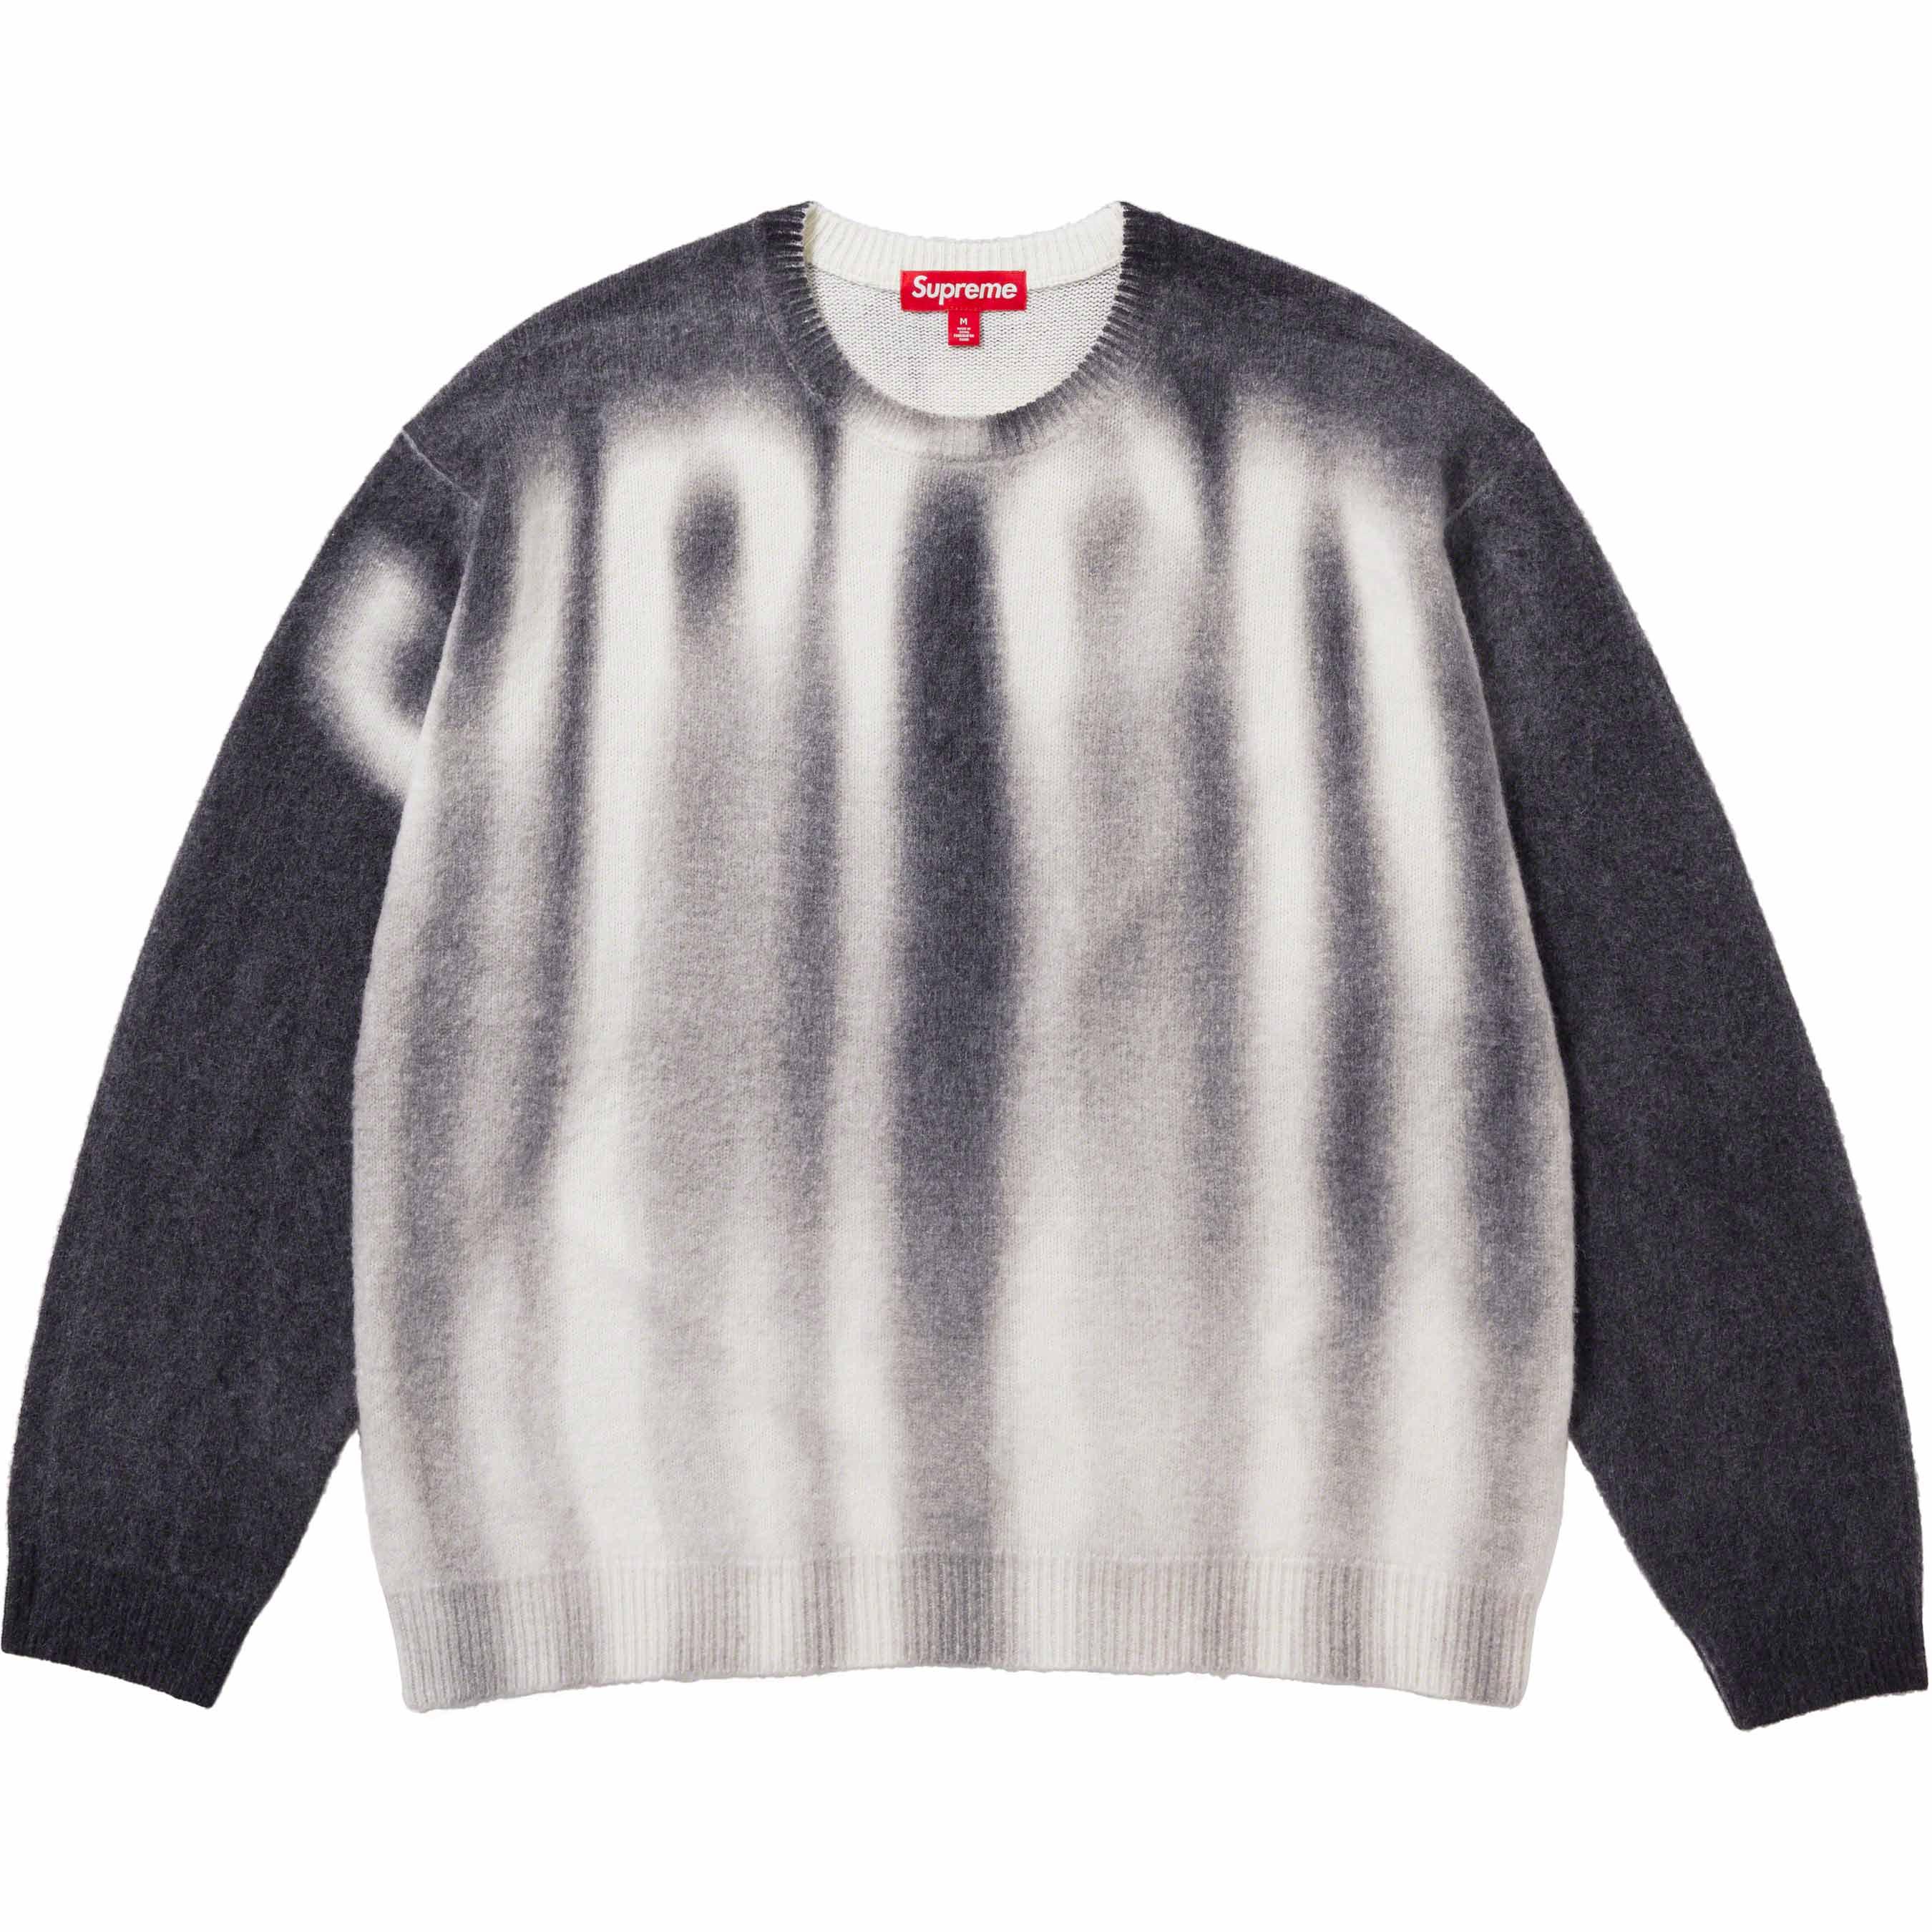 Supreme Blurred Logo Sweater Black M-